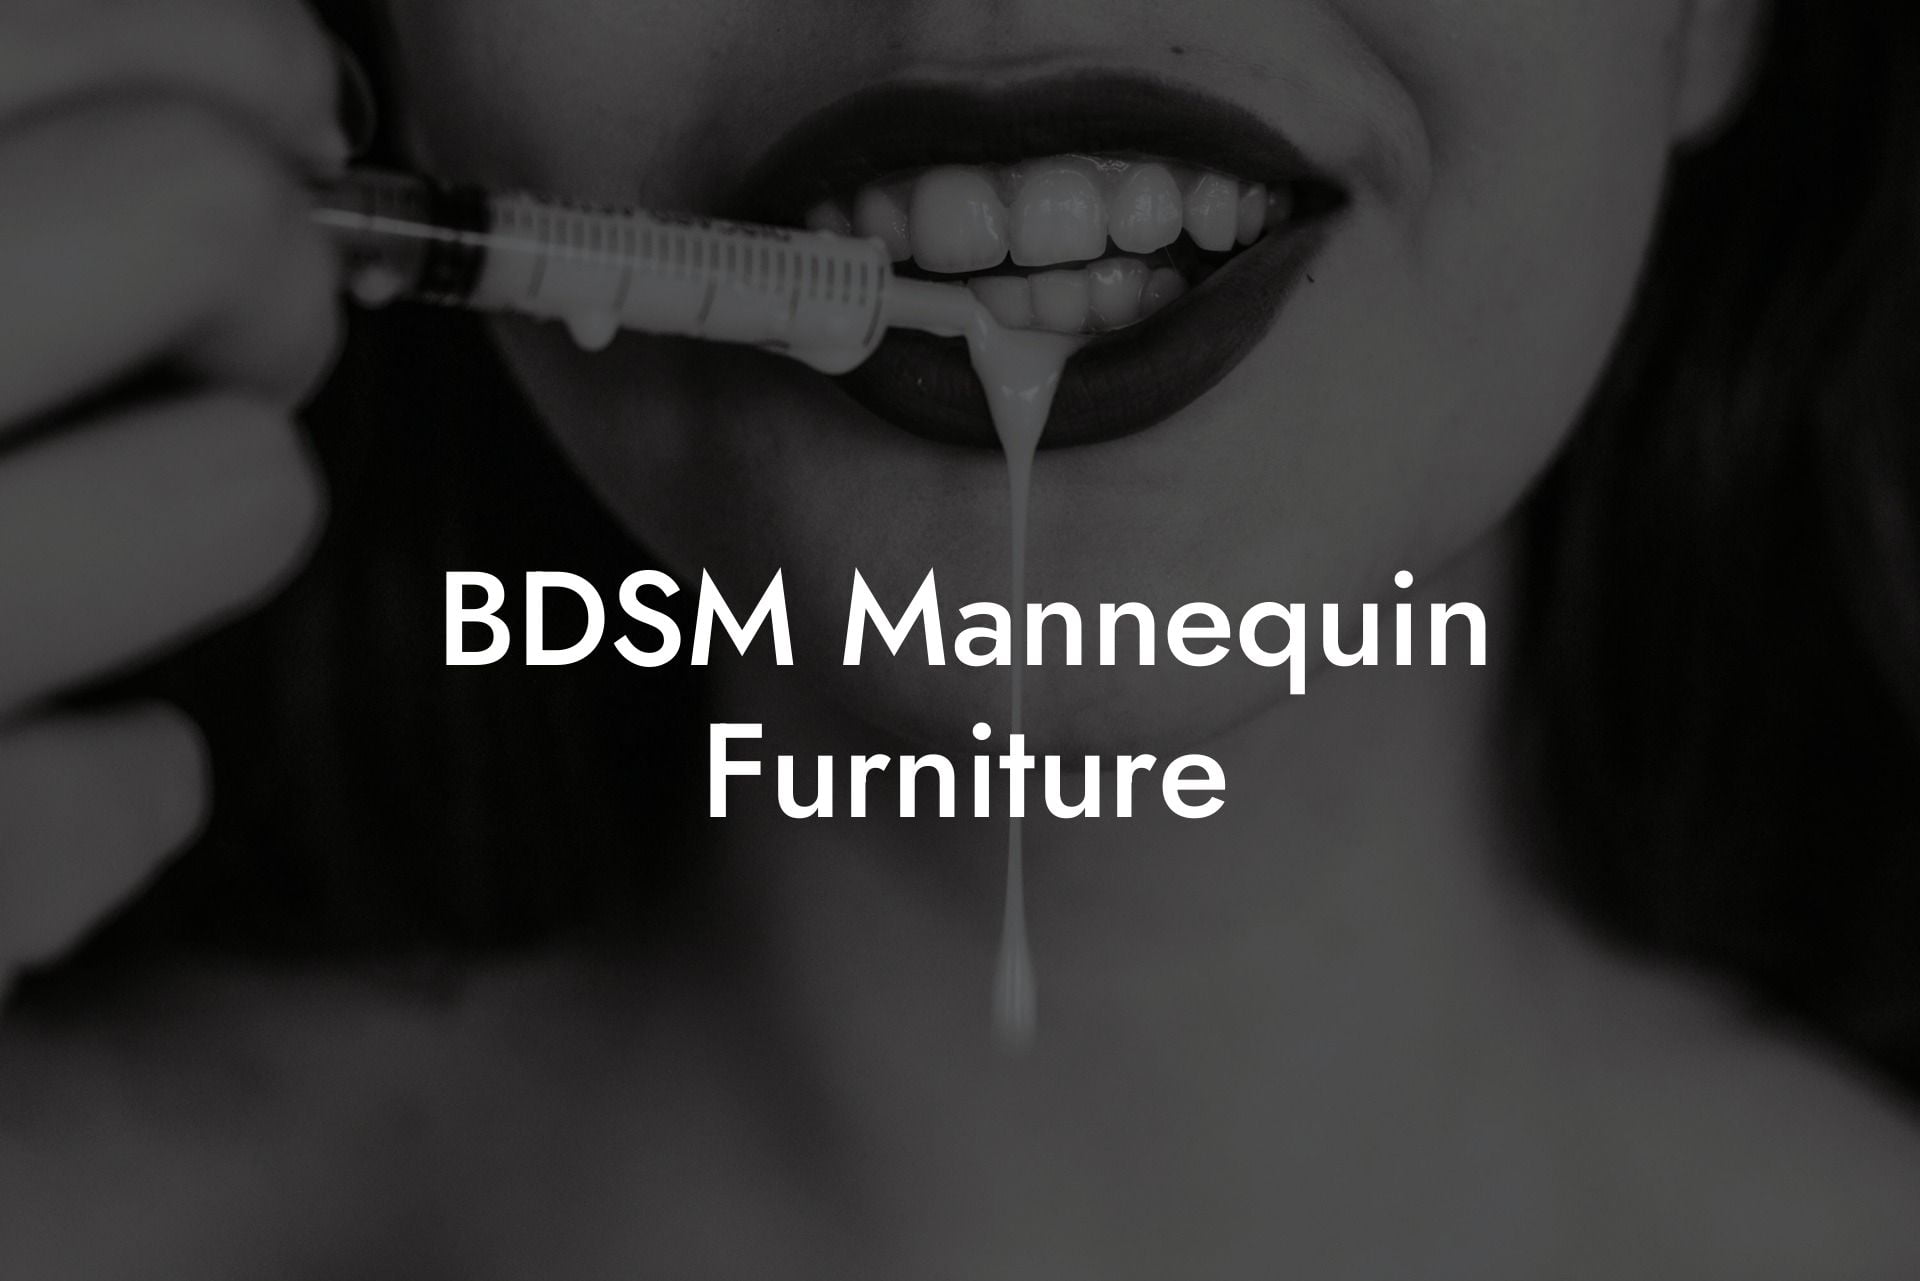 BDSM Mannequin Furniture